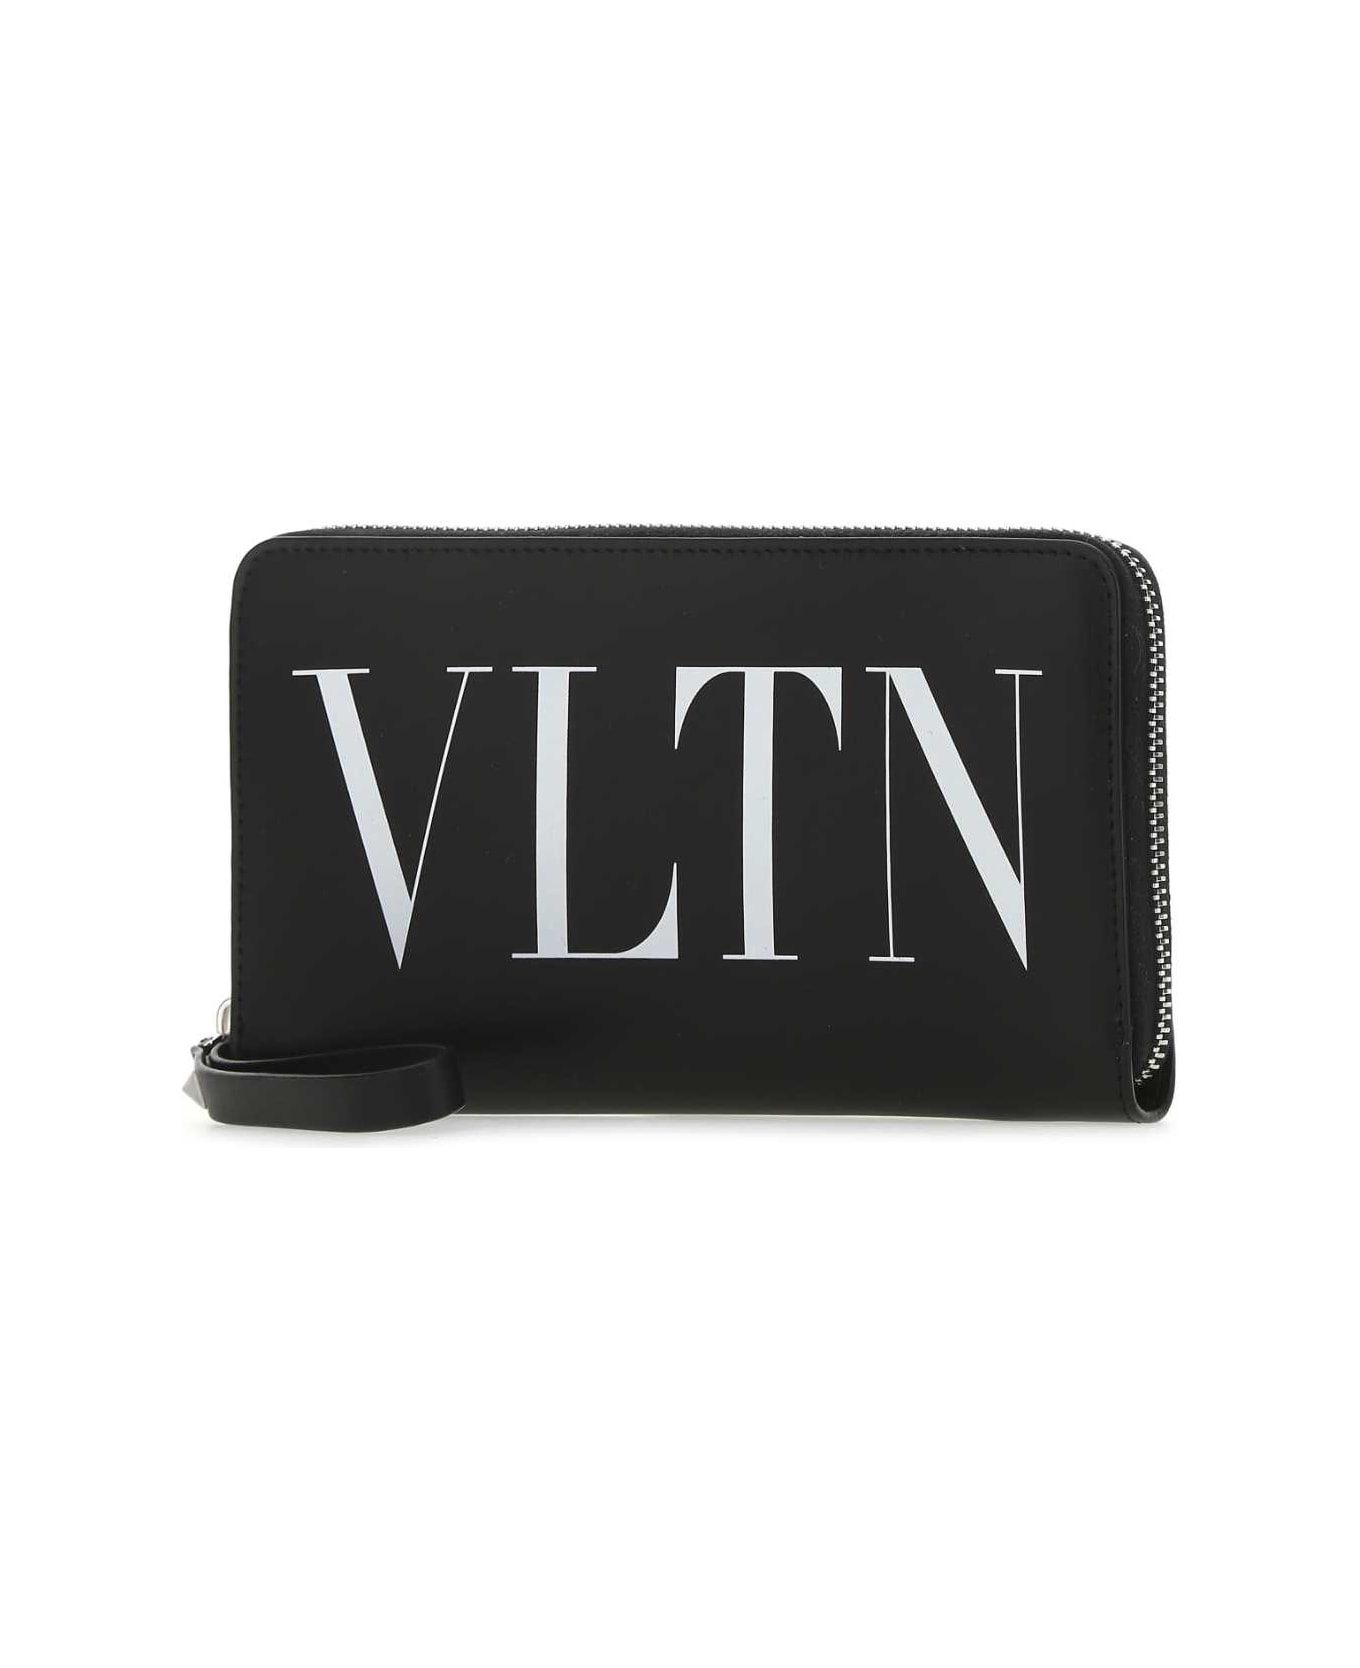 Valentino Garavani Black Leather Vltn Wallet - NEROBIANCO